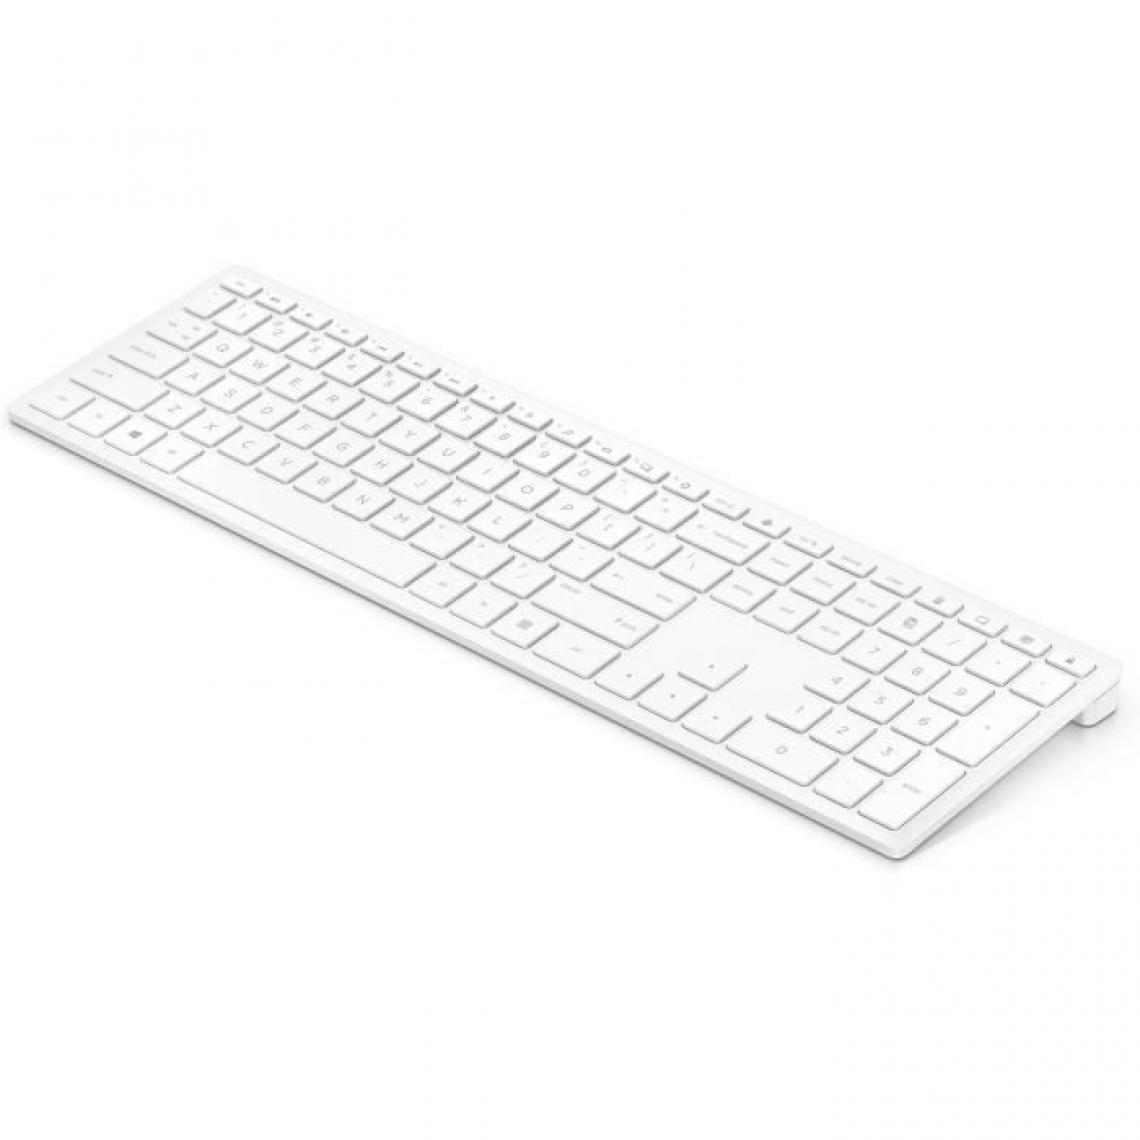 Hp - HP Pavilion Wireless Keyboard 600 (White) FR - Clavier